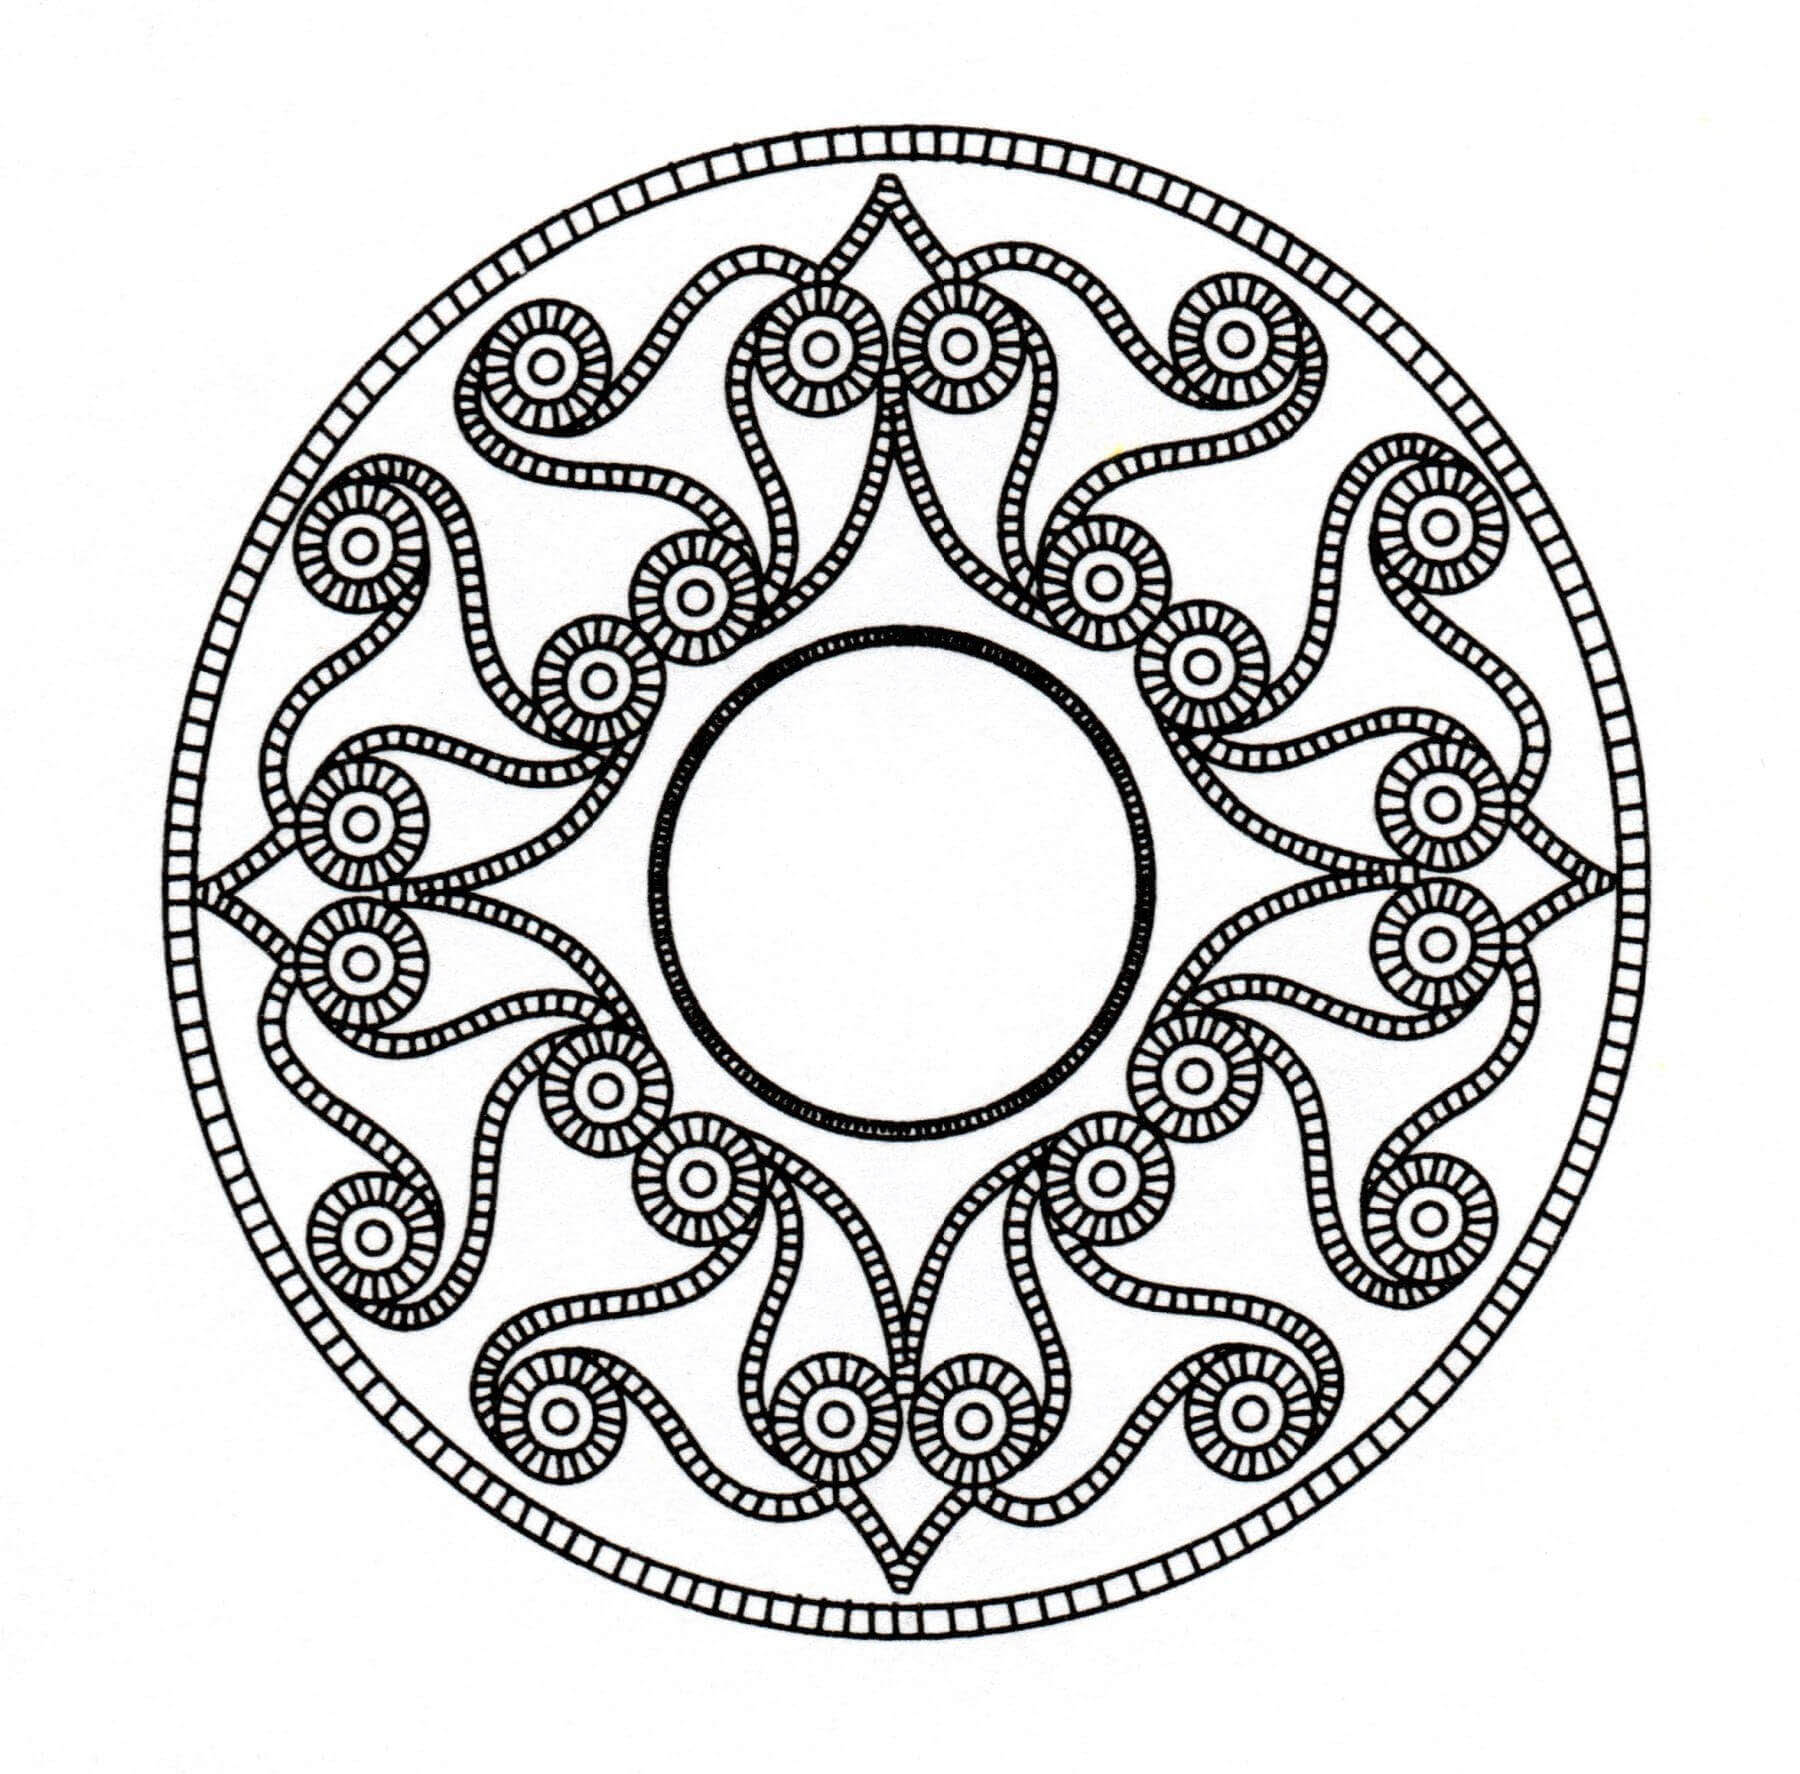 Unique Zen & Anti-stress Mandala. Designing and coloring mandalas give you a feeling of calmness.